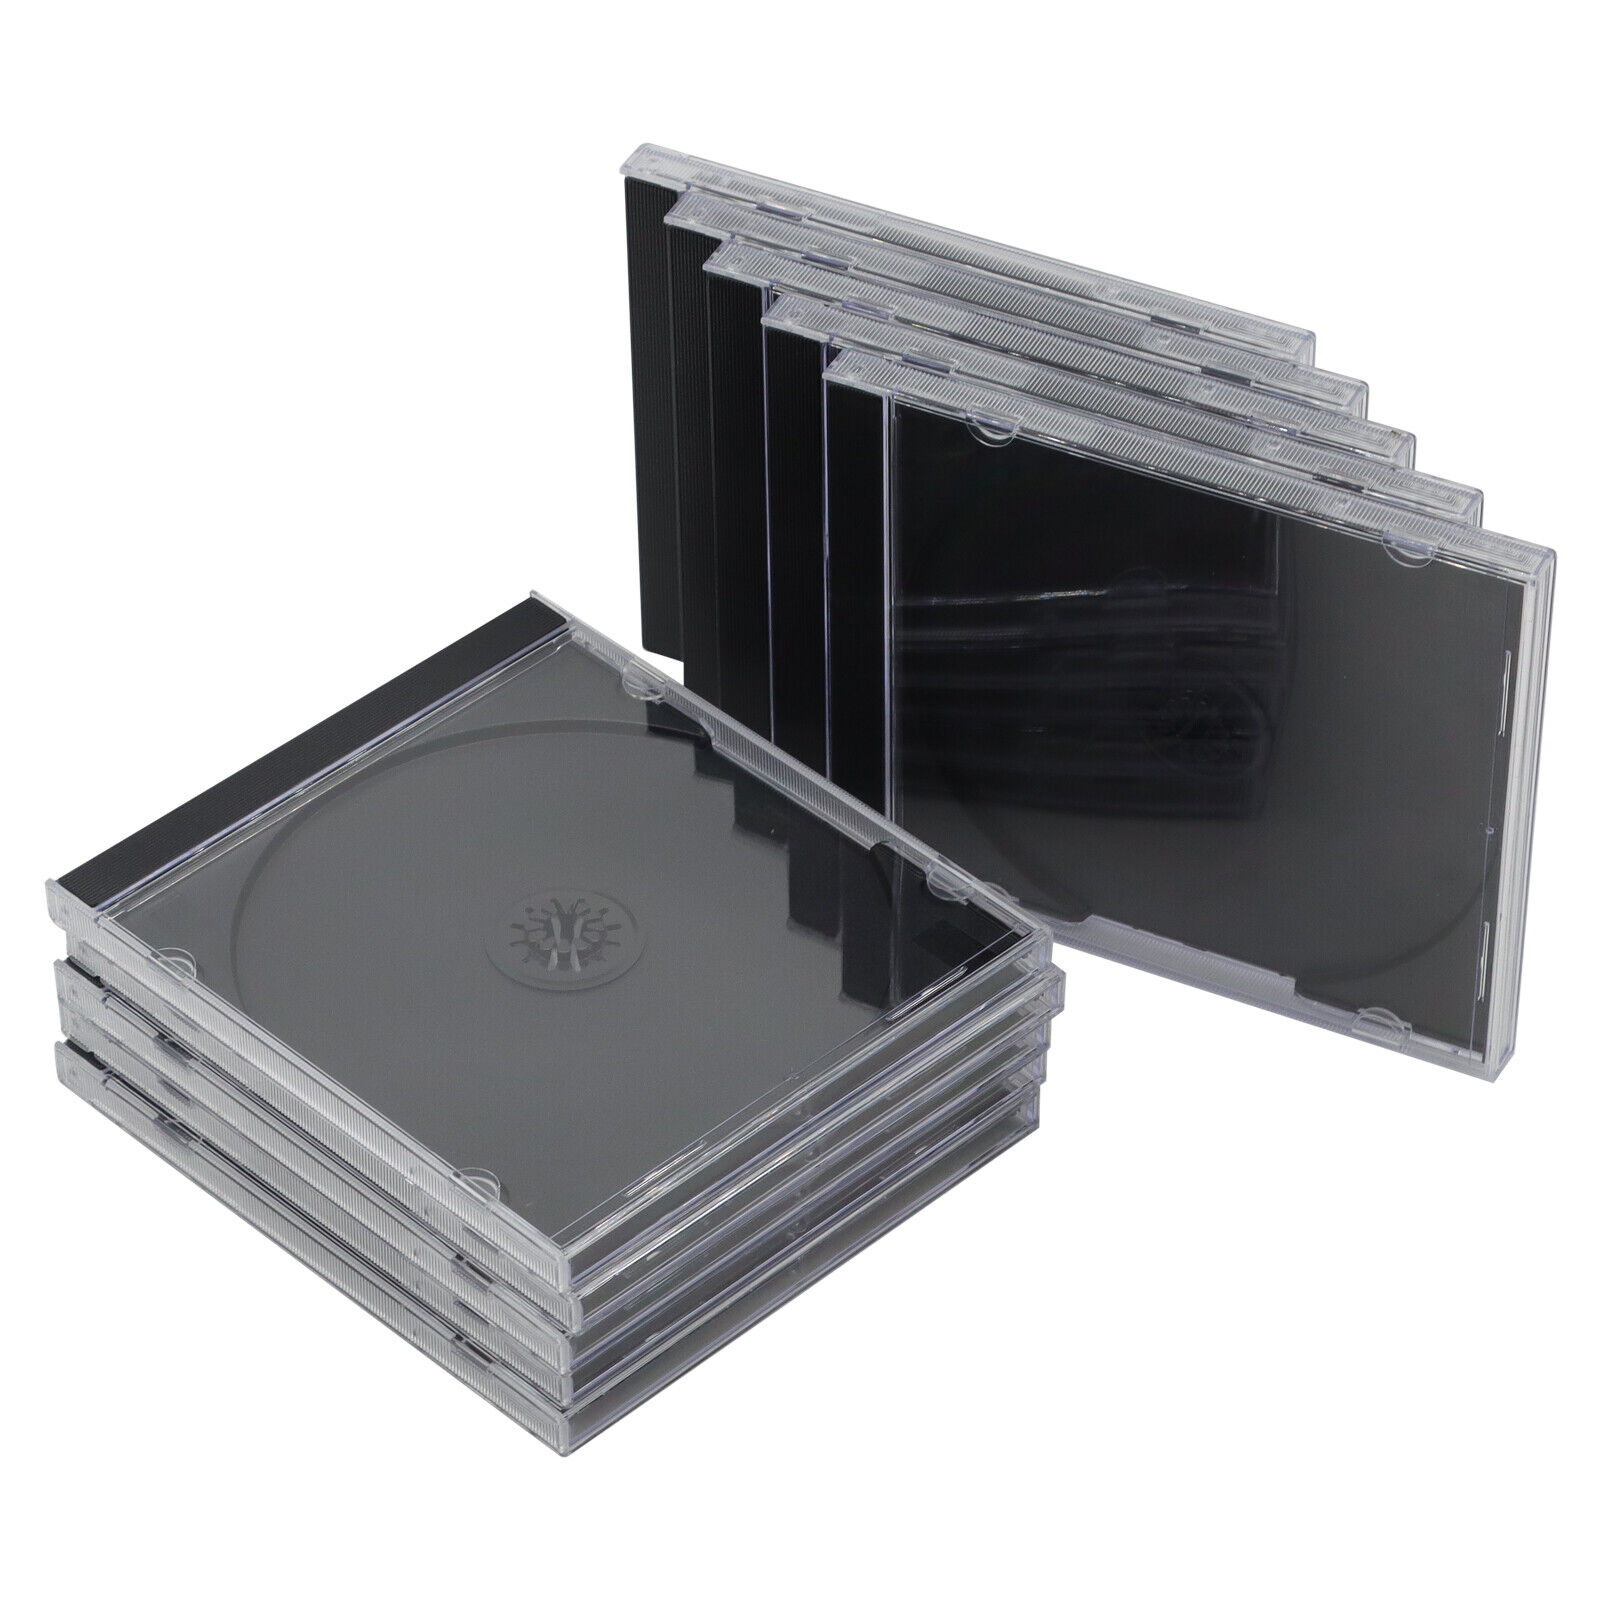 20x Single Disc STANDARD CD Jewel Black Case Lots DVD packing Organizer